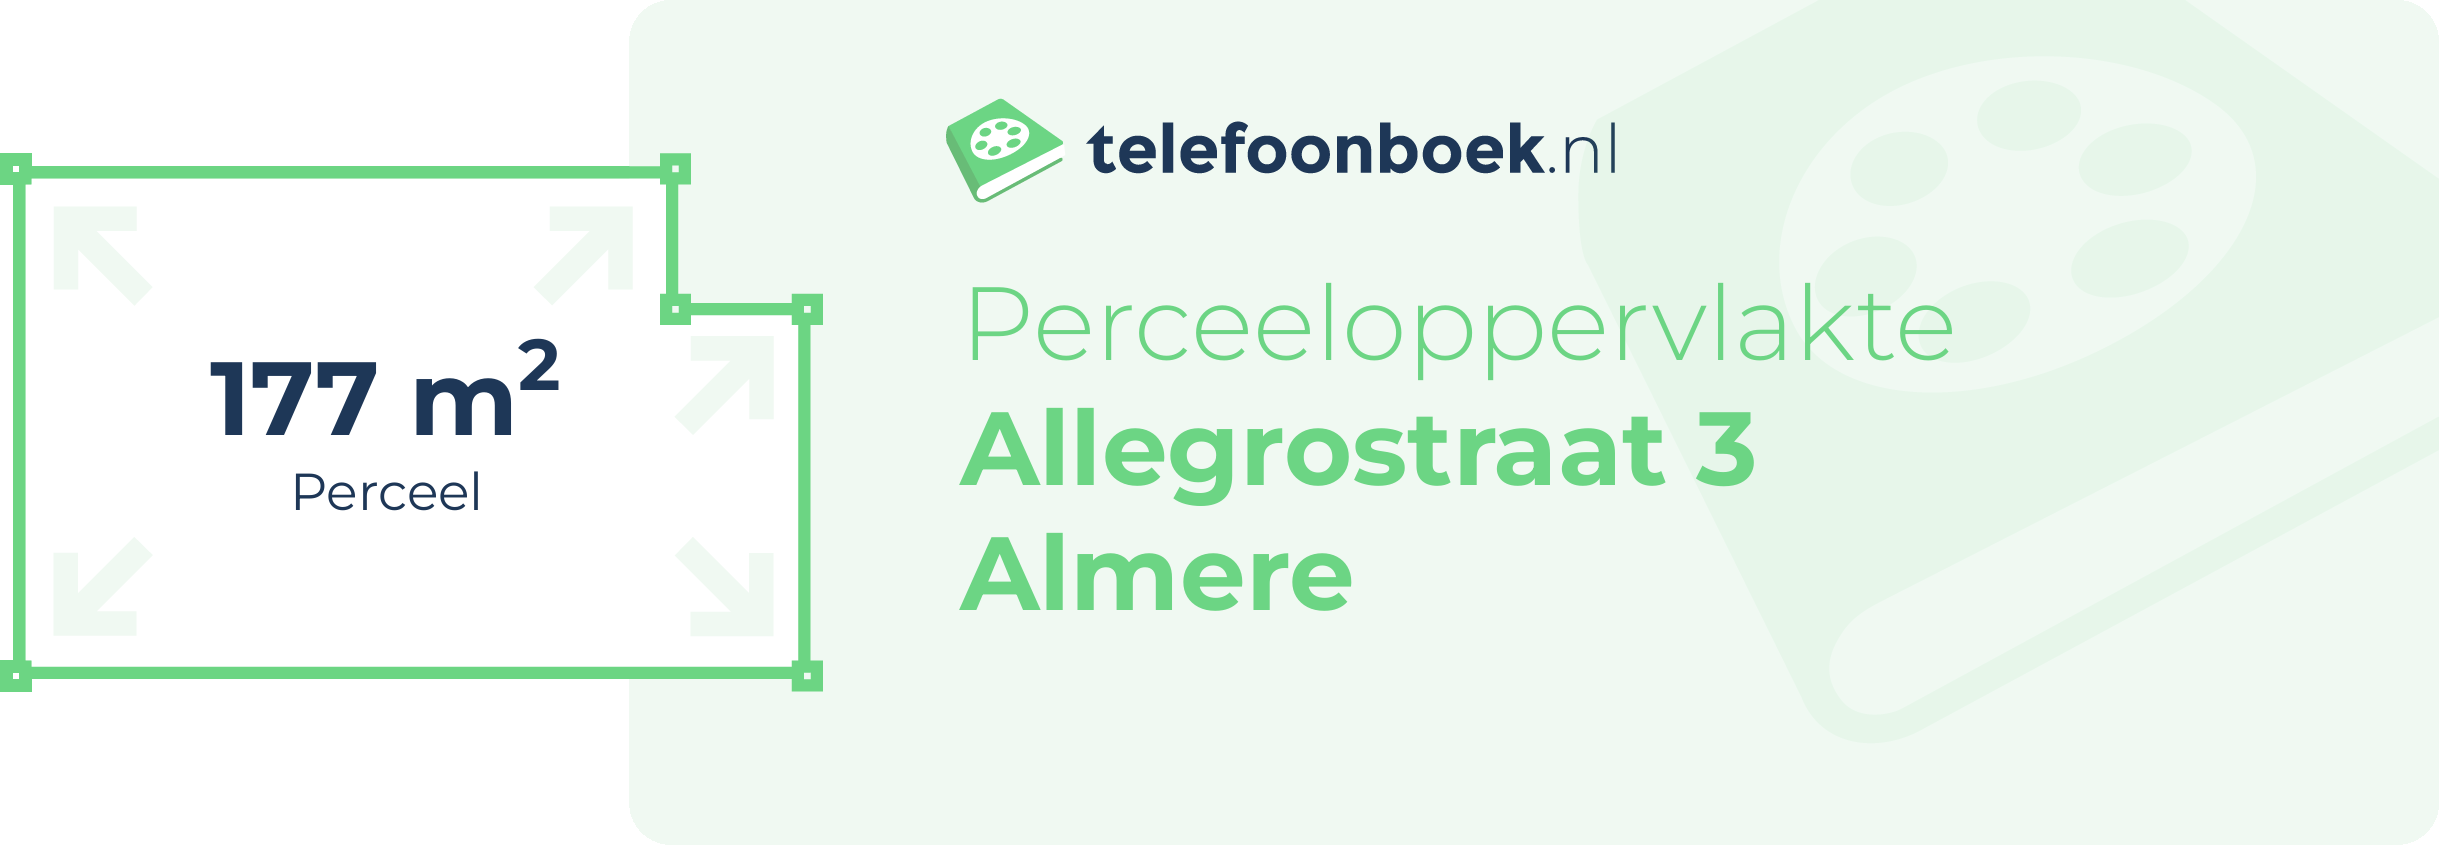 Perceeloppervlakte Allegrostraat 3 Almere